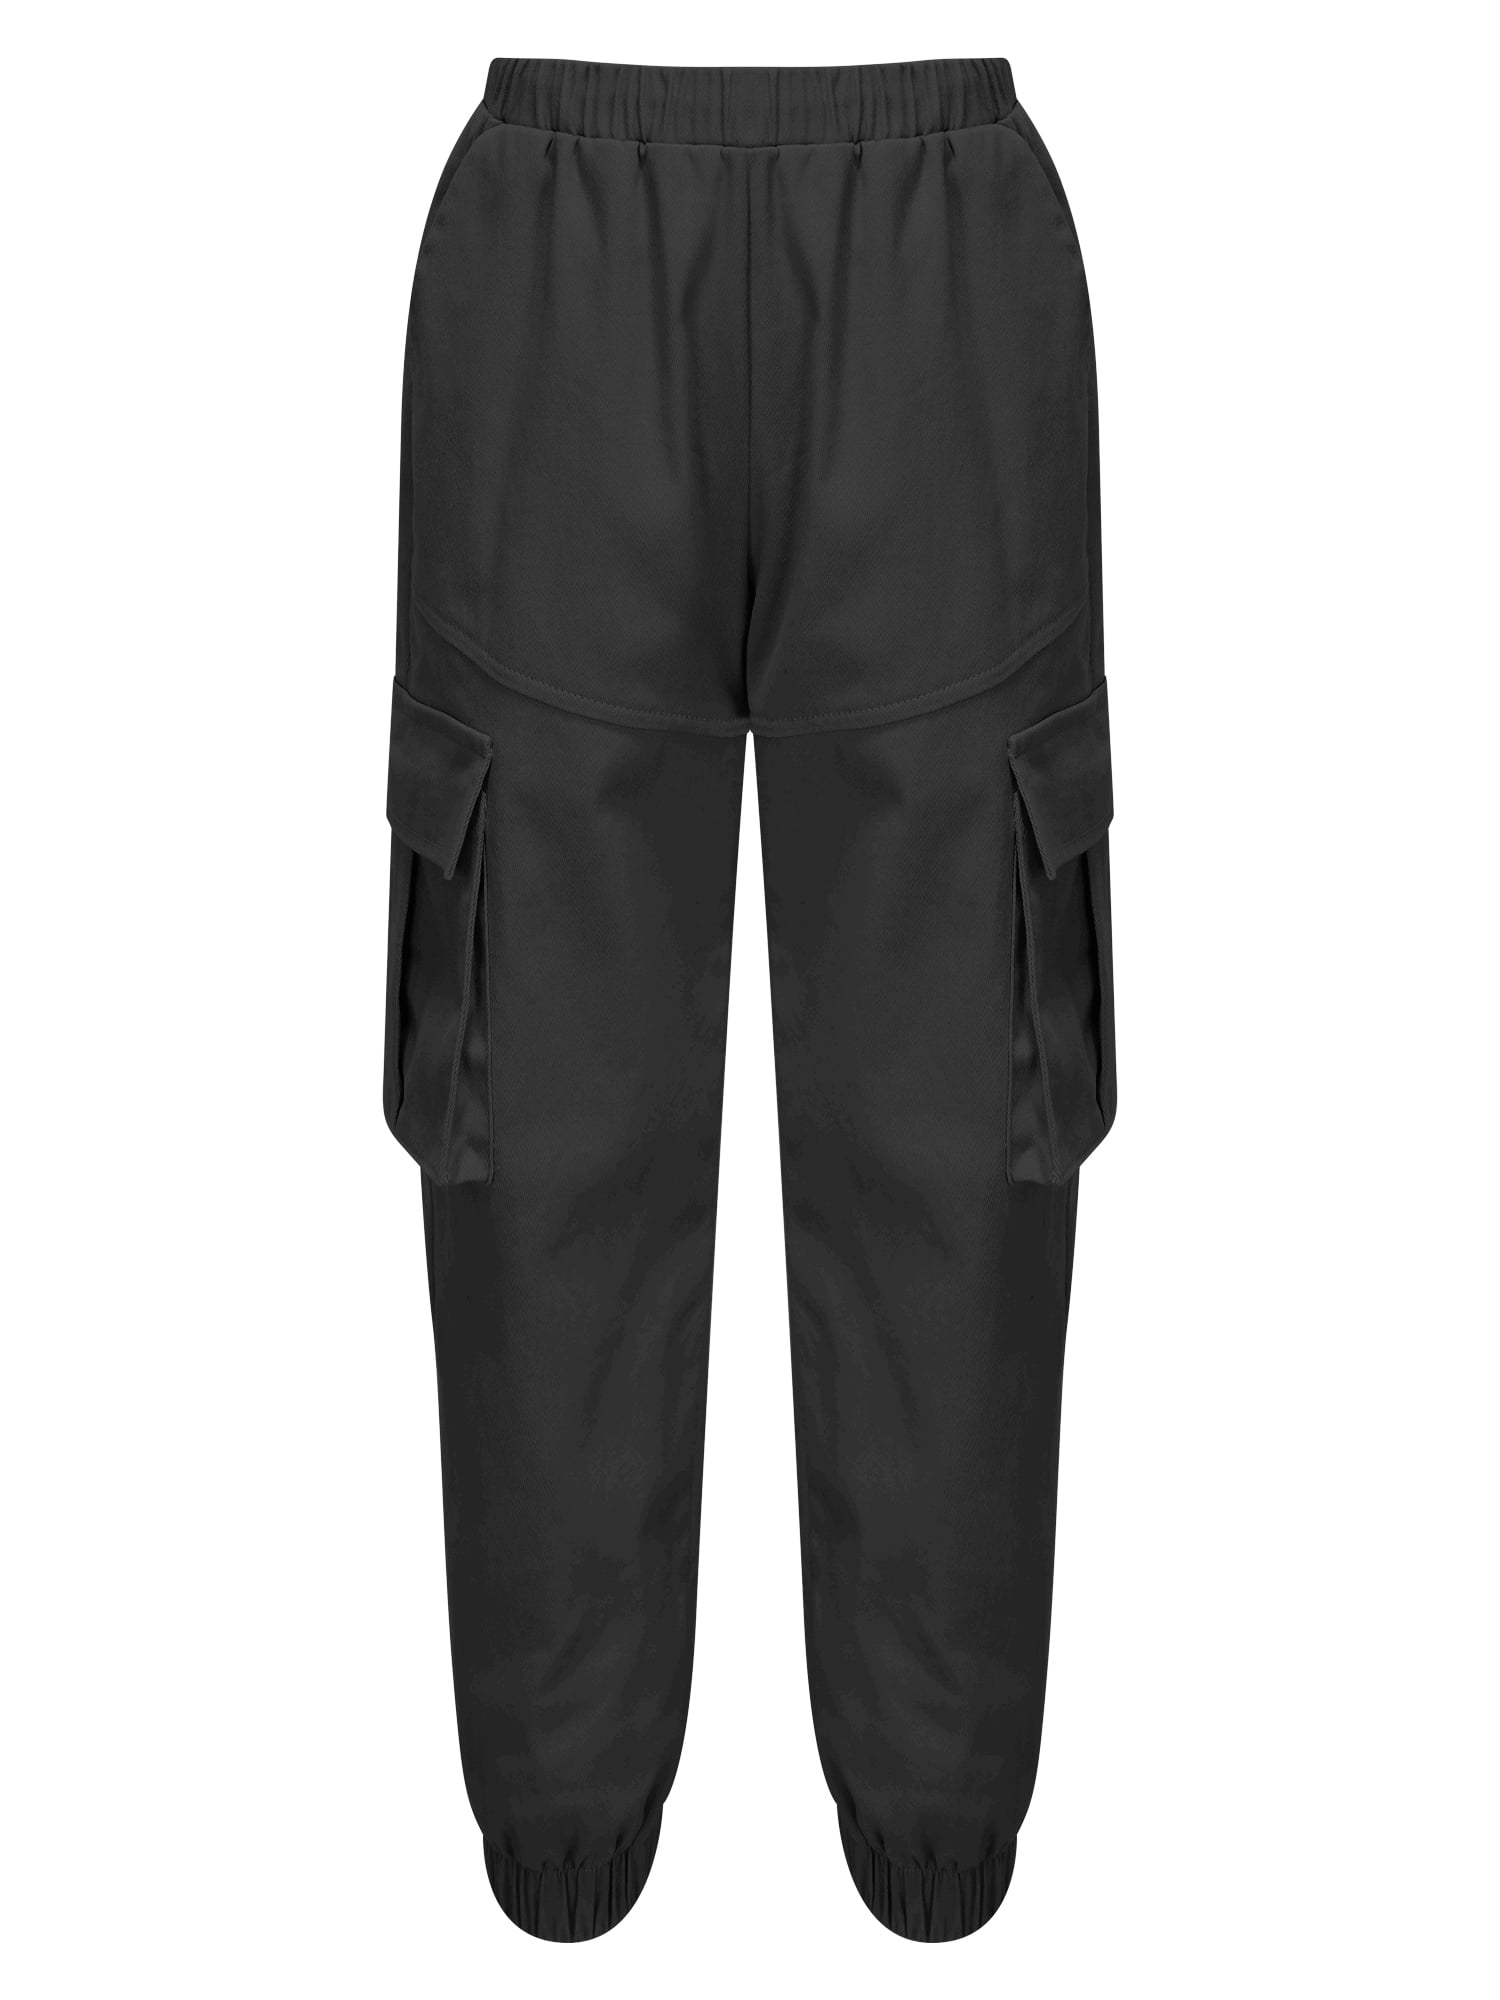 YONGHS Kids Girls Cargo Pants Casual Long Trousers Solid Color Sweatpants  Black 8